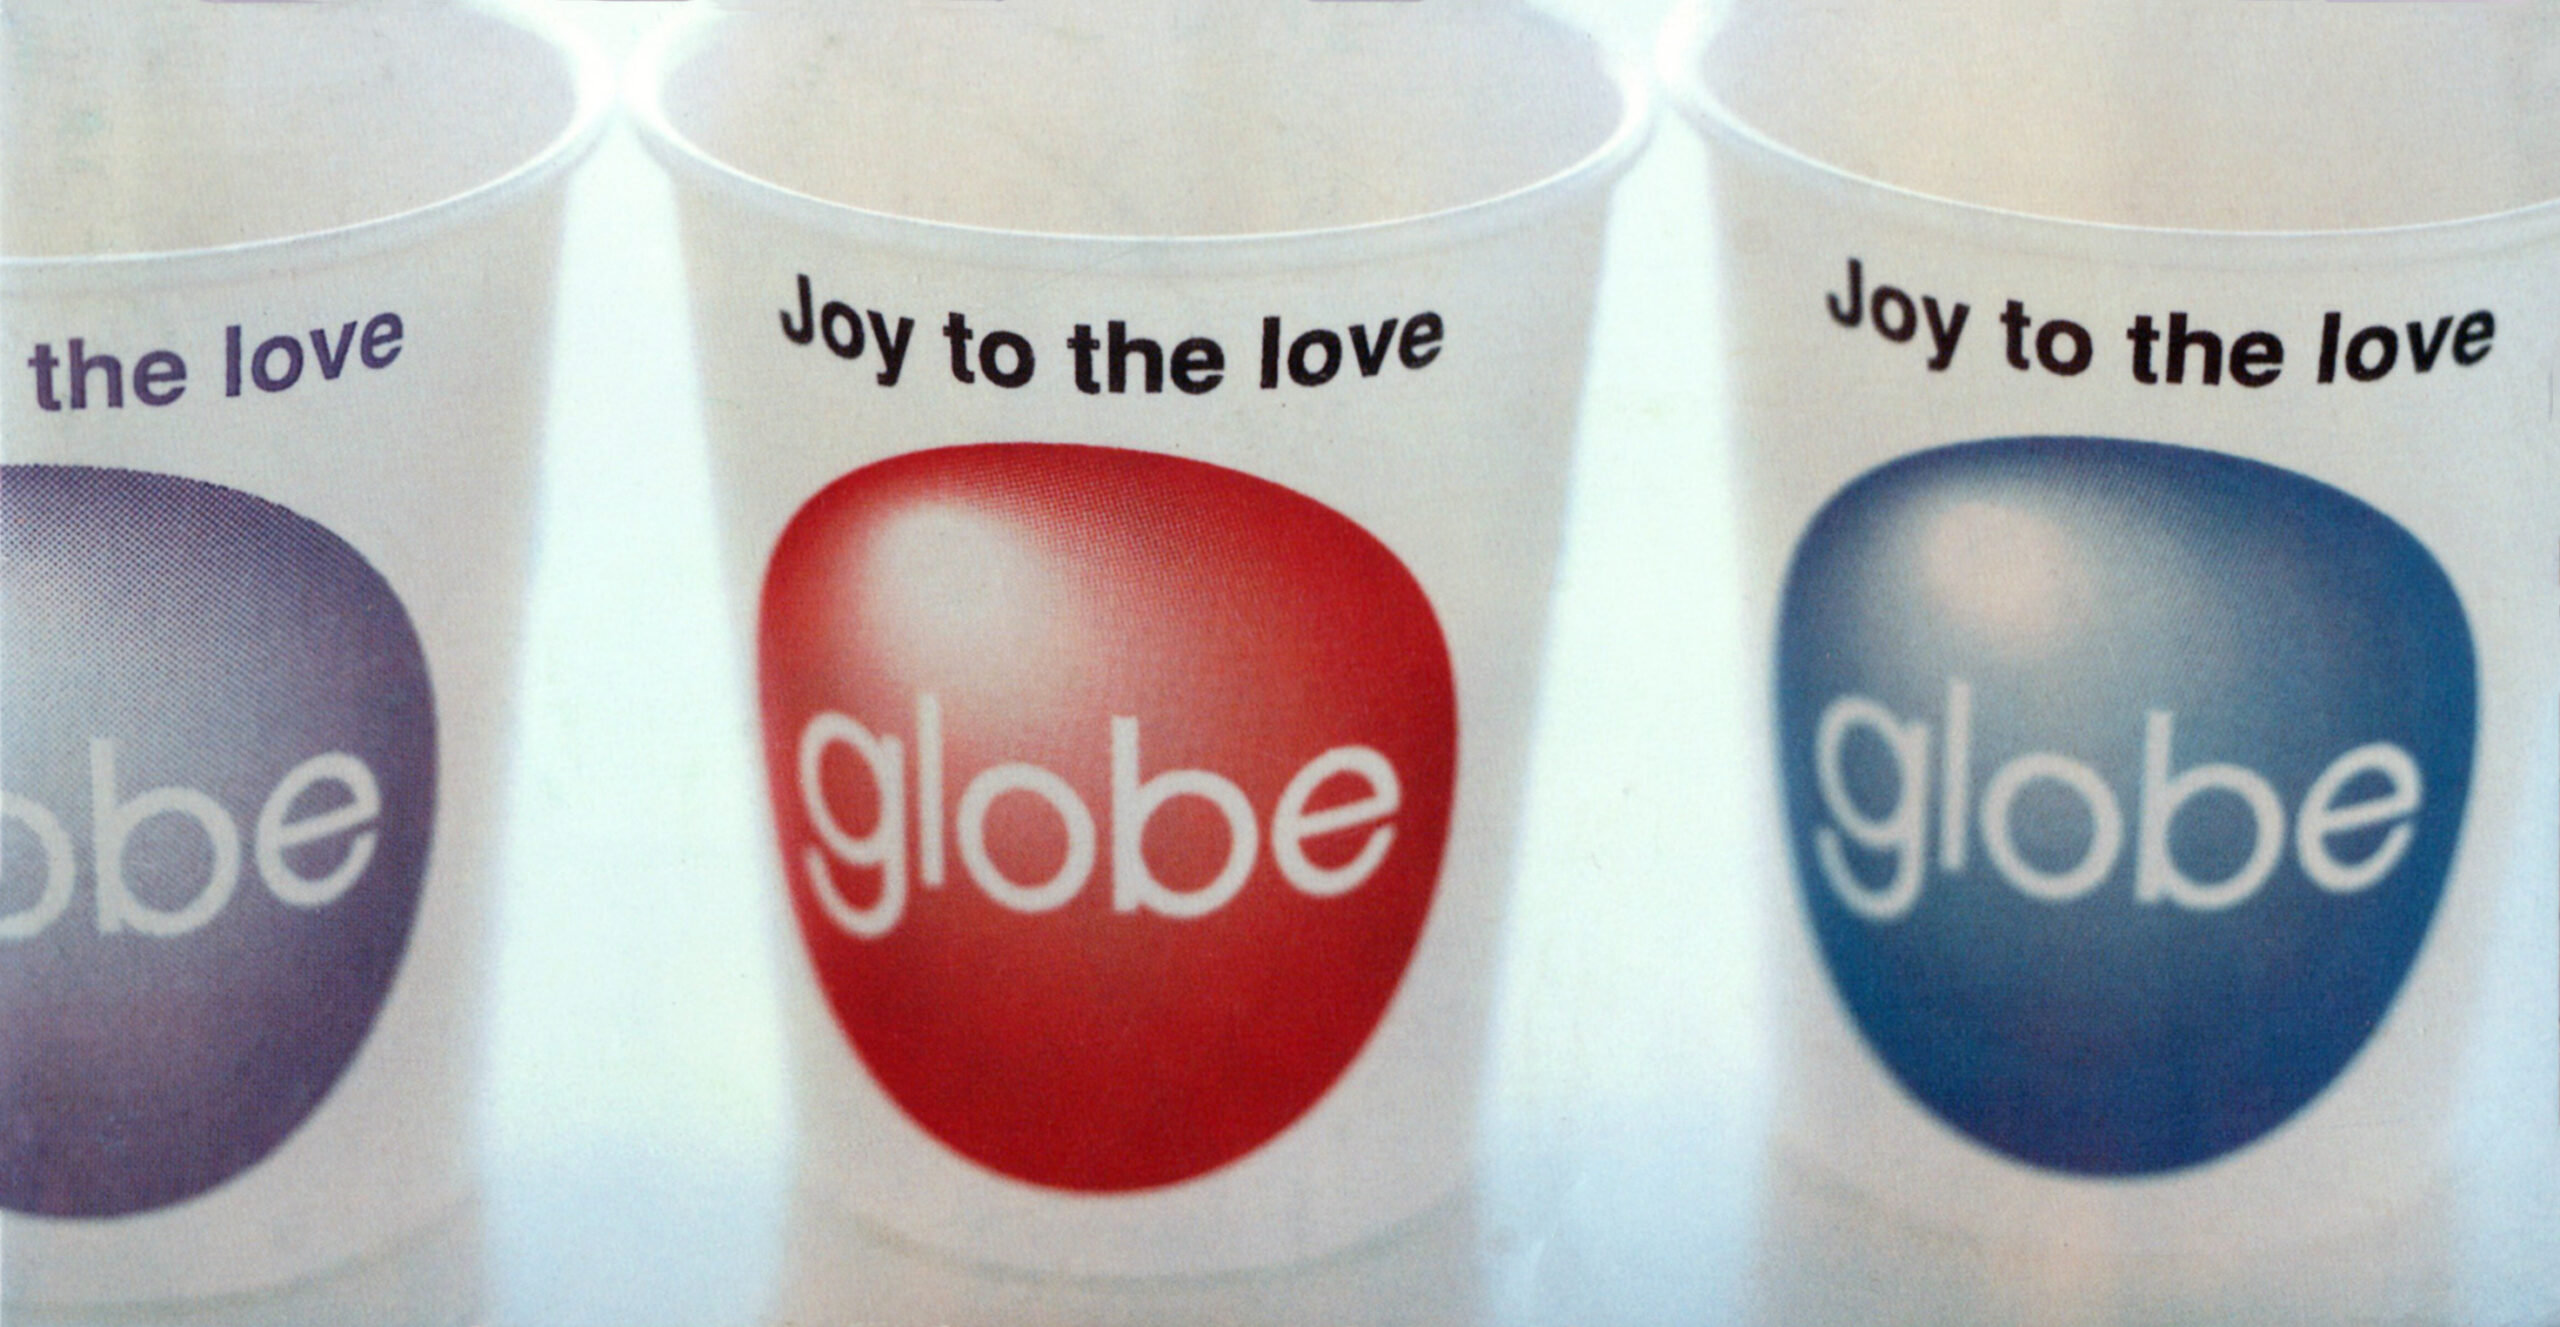 Joy to the love / globe